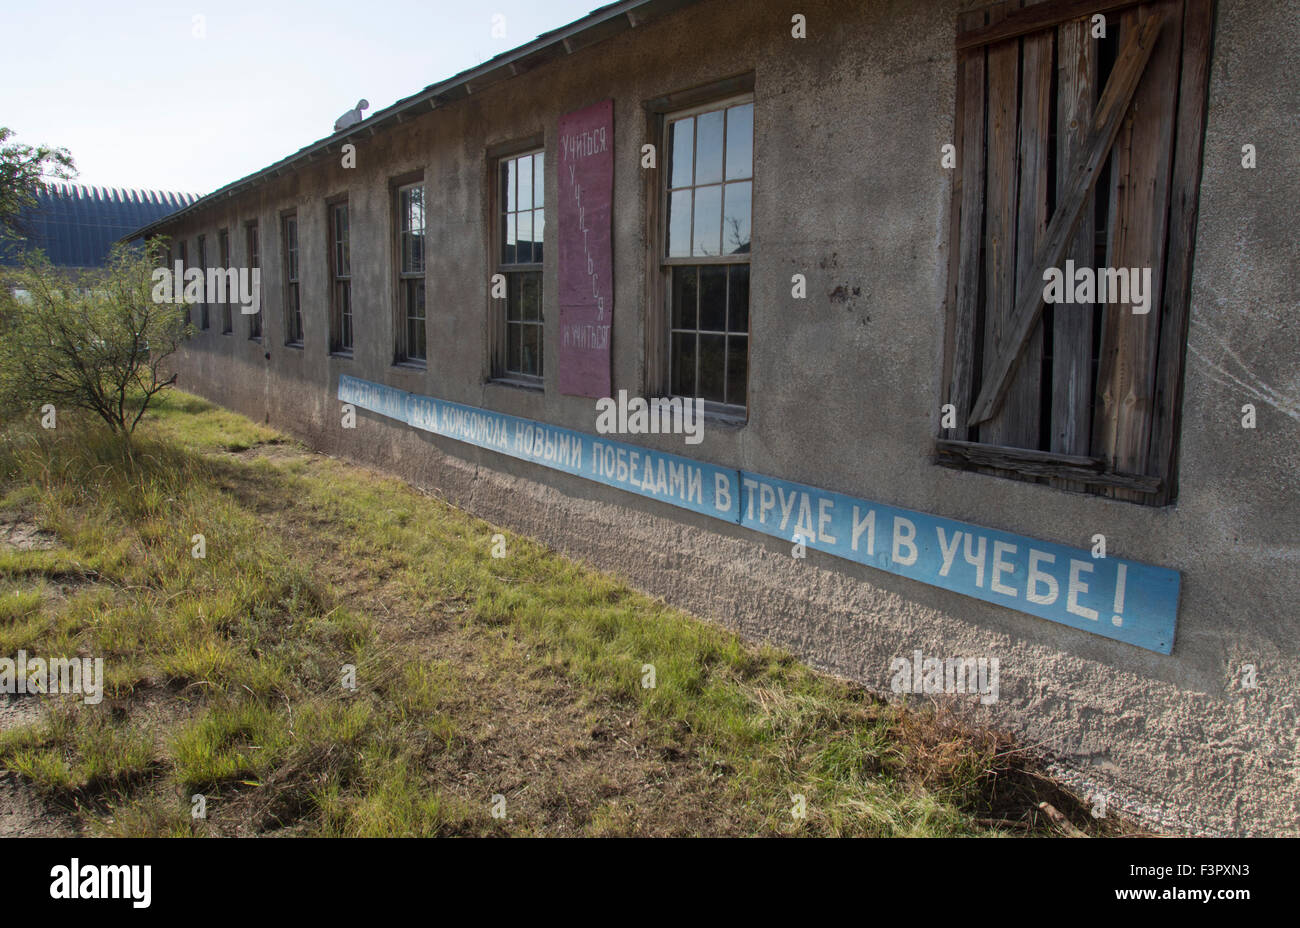 Ilya Kabakov School No.6 at the Chinati Foundation in Marfa, Texas, is reminiscent of an abandoned Soviet Era school building. Stock Photo